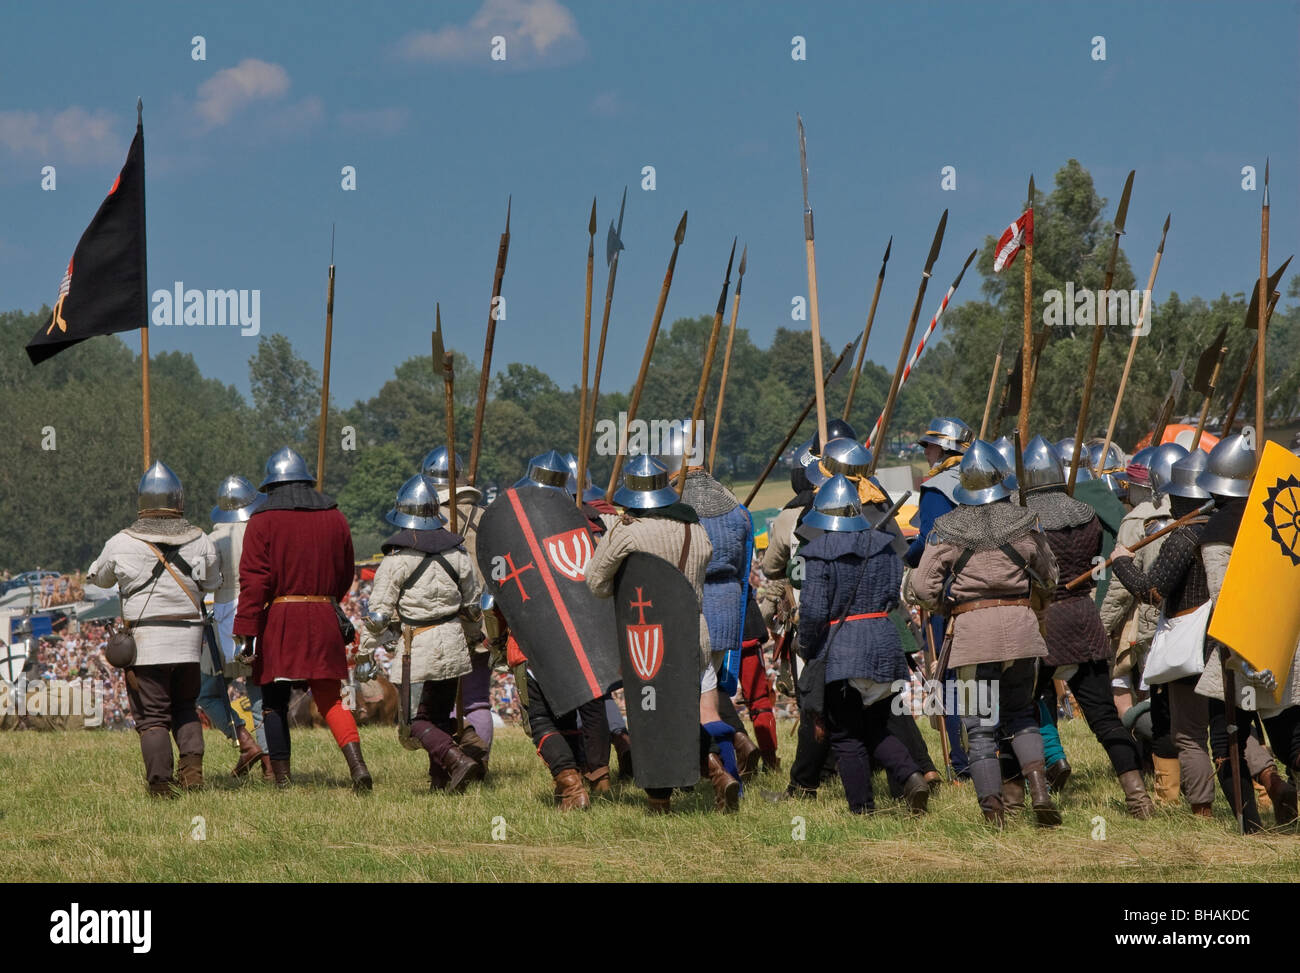 Reenactors at Battle of Grunwald of 1410 in Warminsko-Mazurskie province, Poland Stock Photo